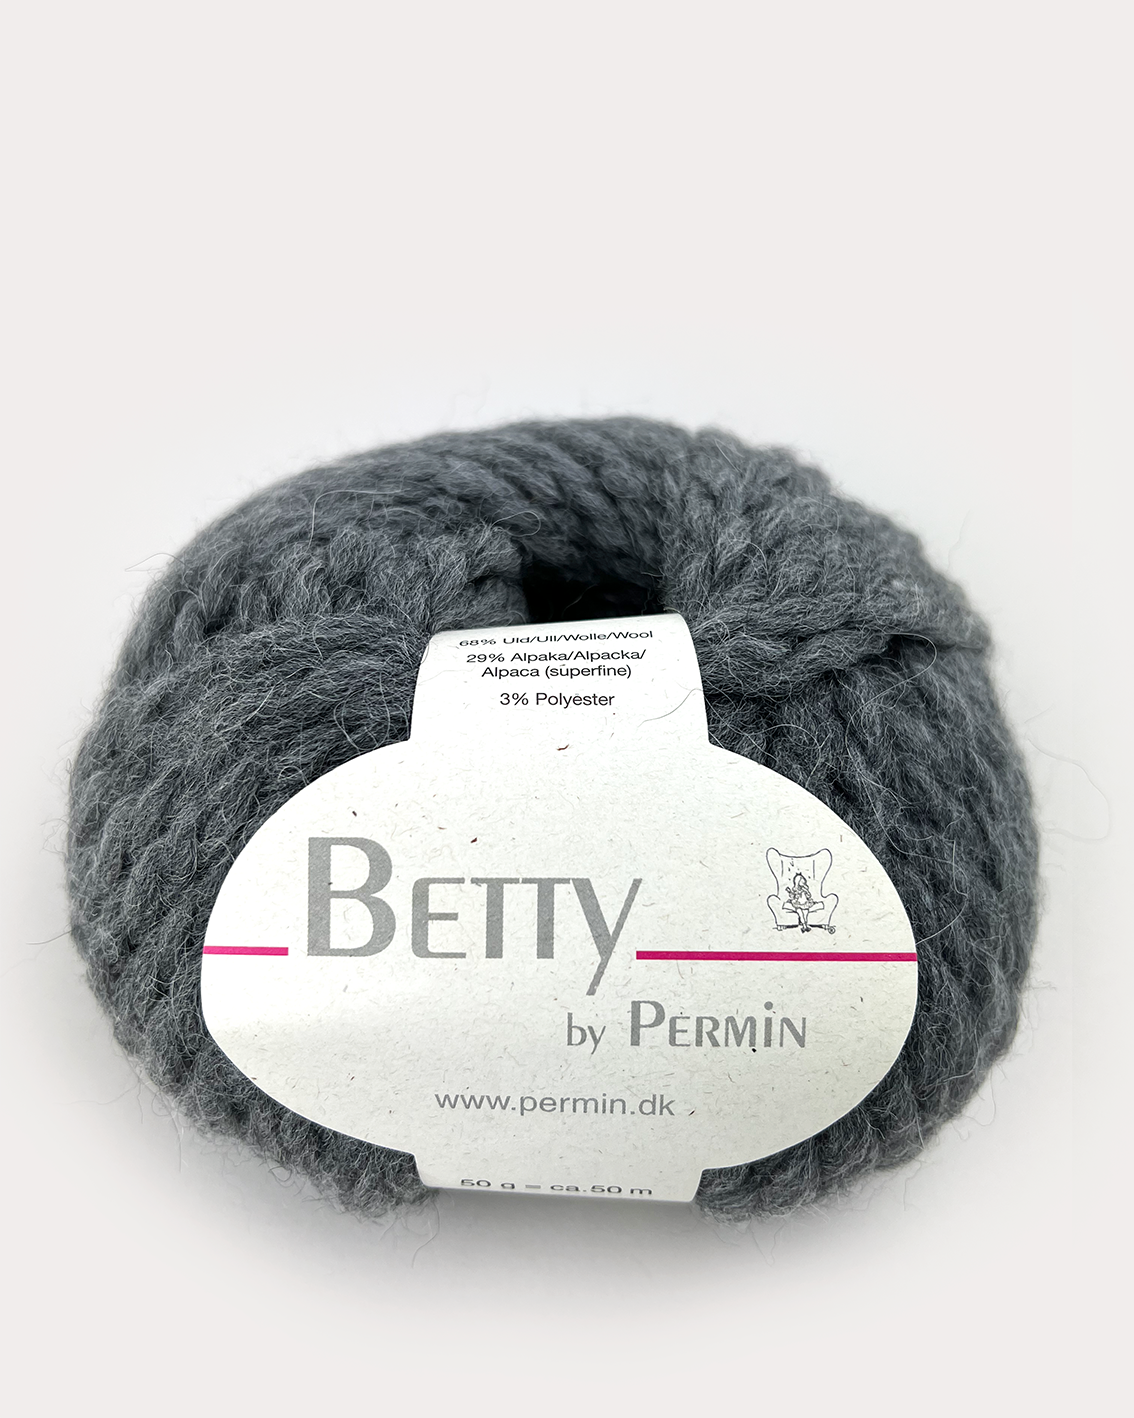 Betty by Permin